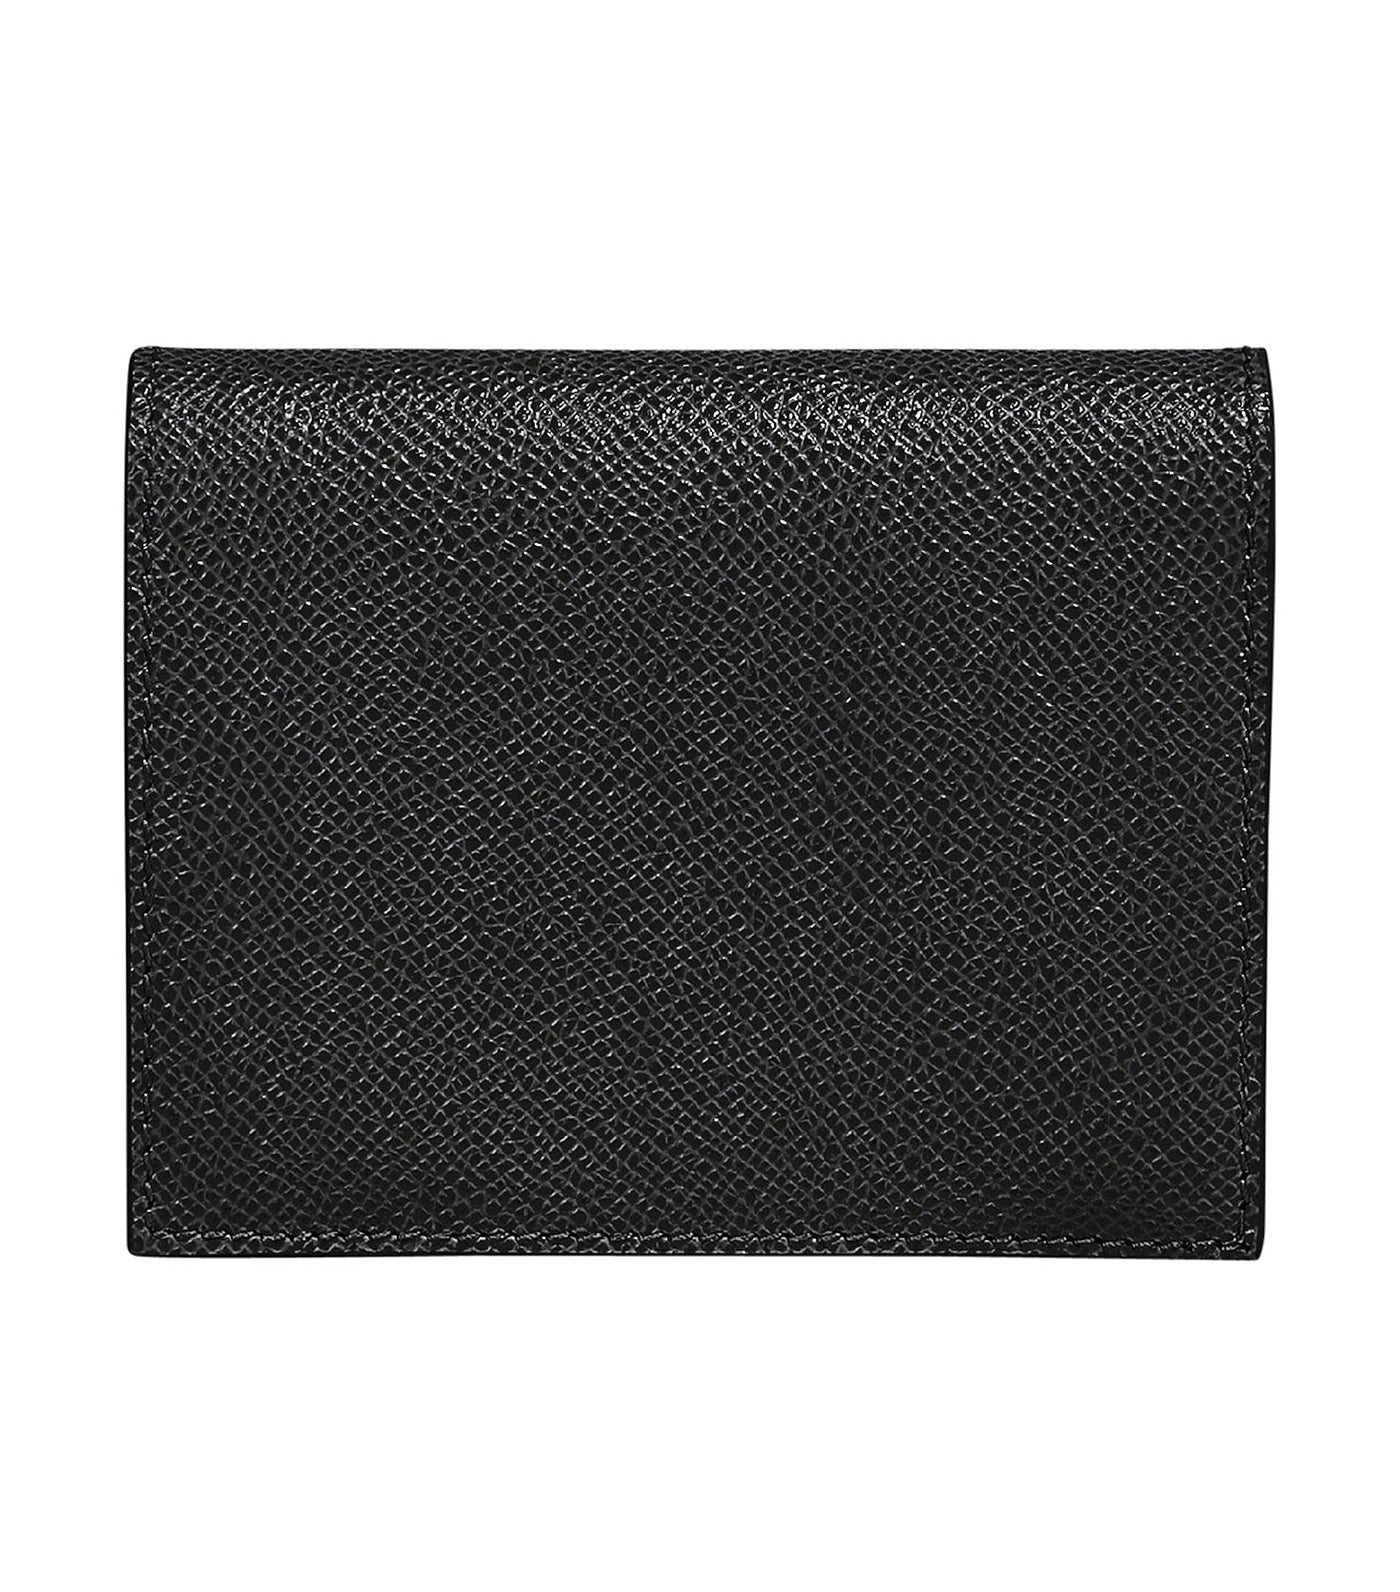 Gancini Compact Wallet Black